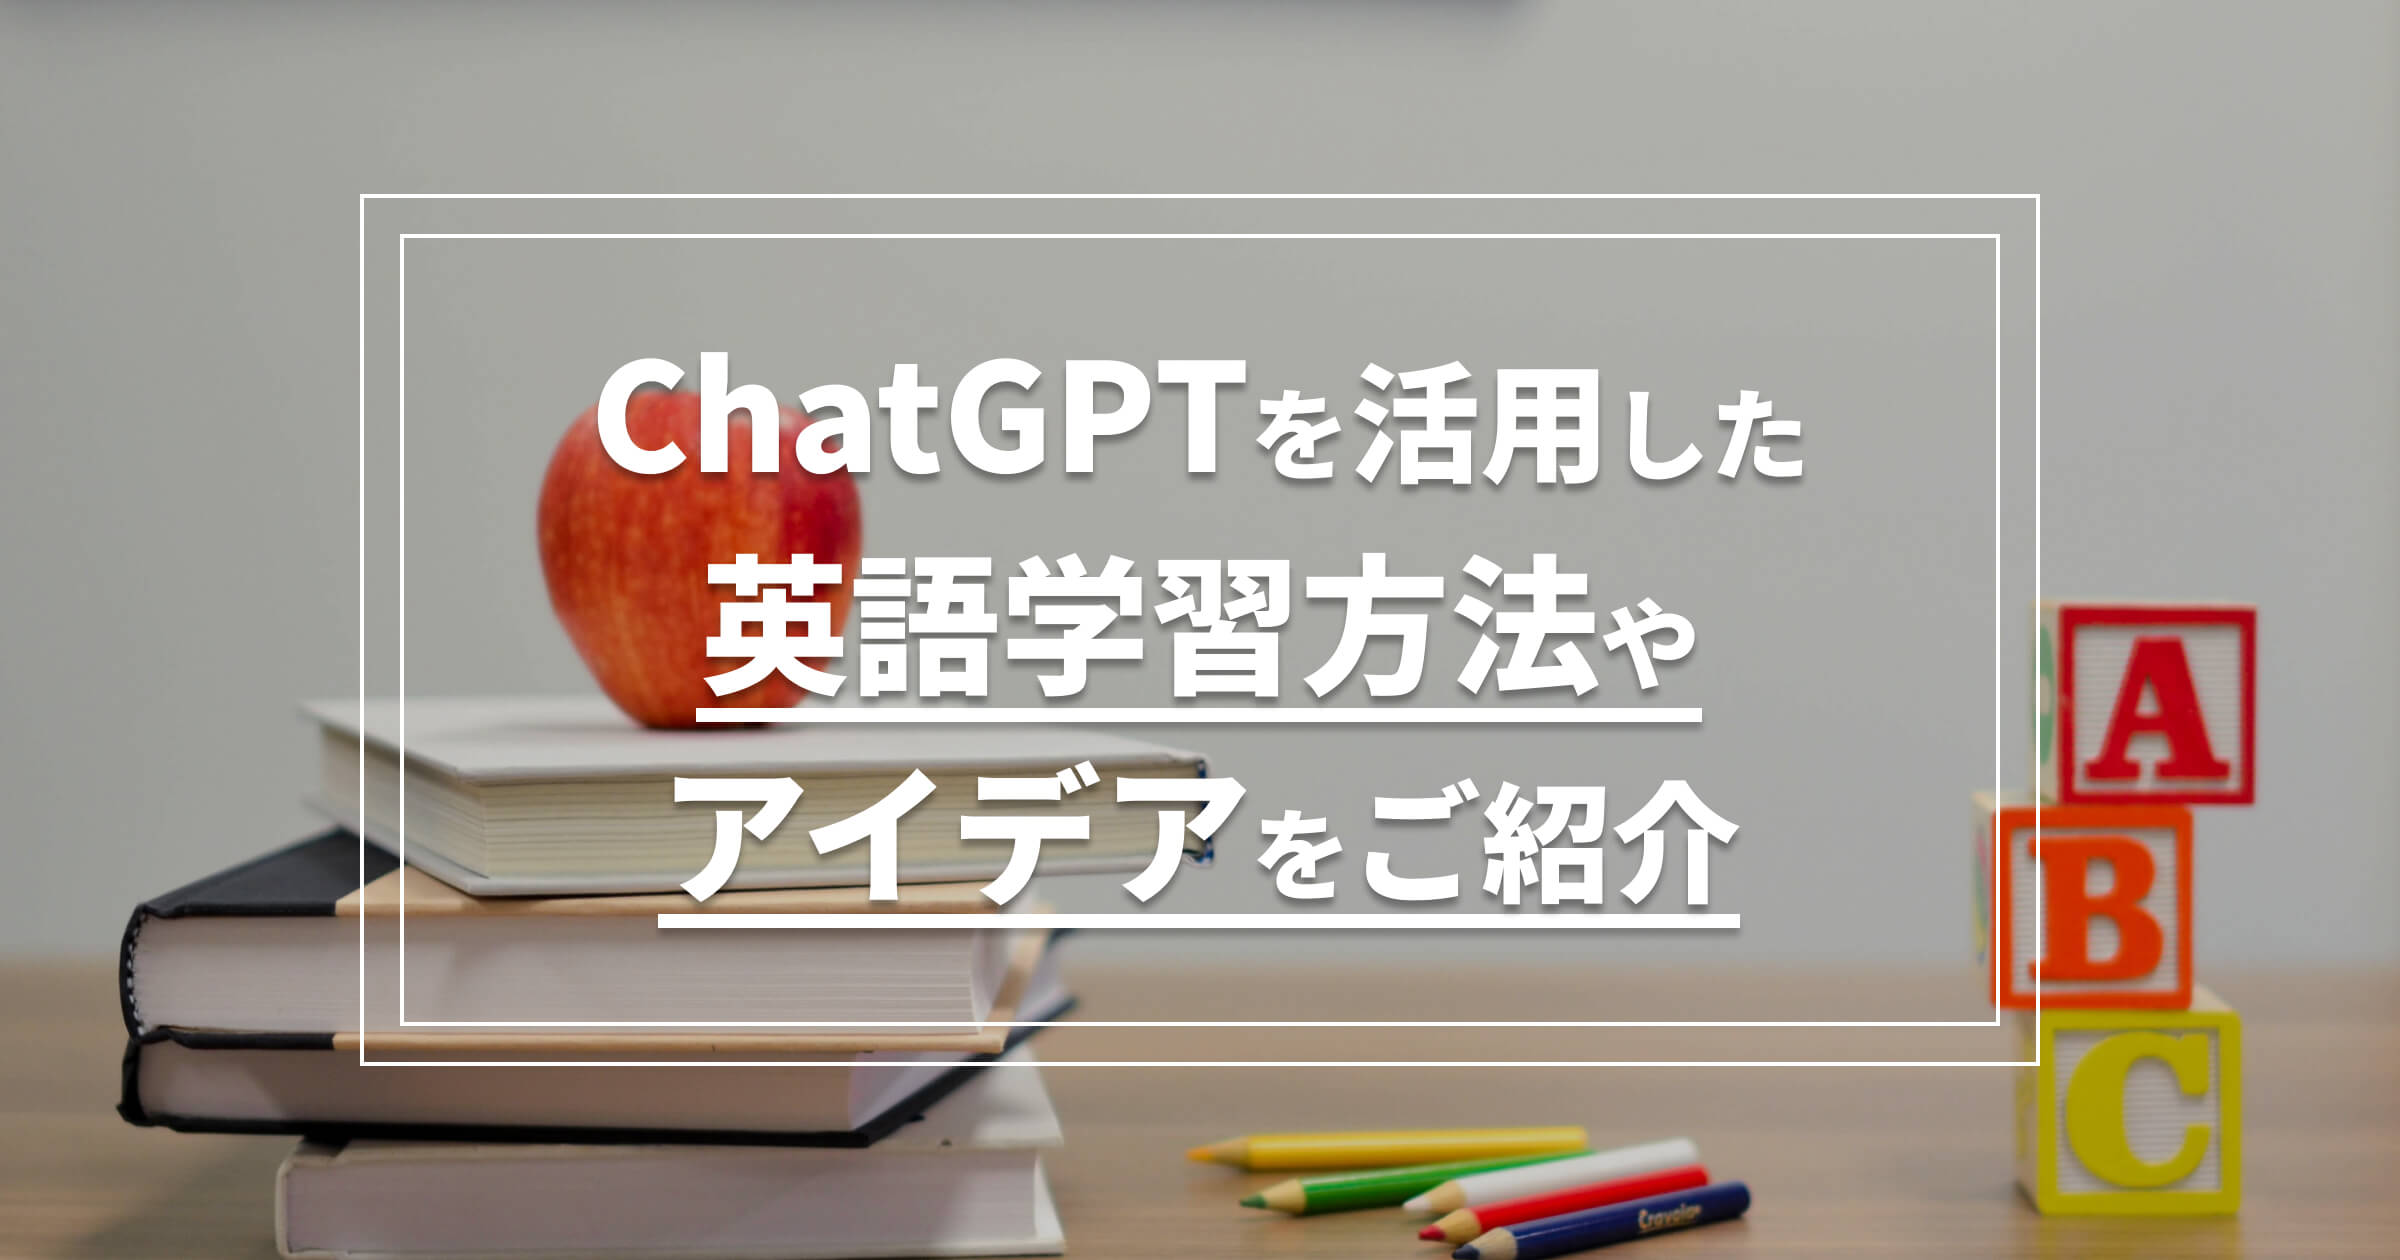 ChatGPTを活用した英語学習方法やアイデアをご紹介